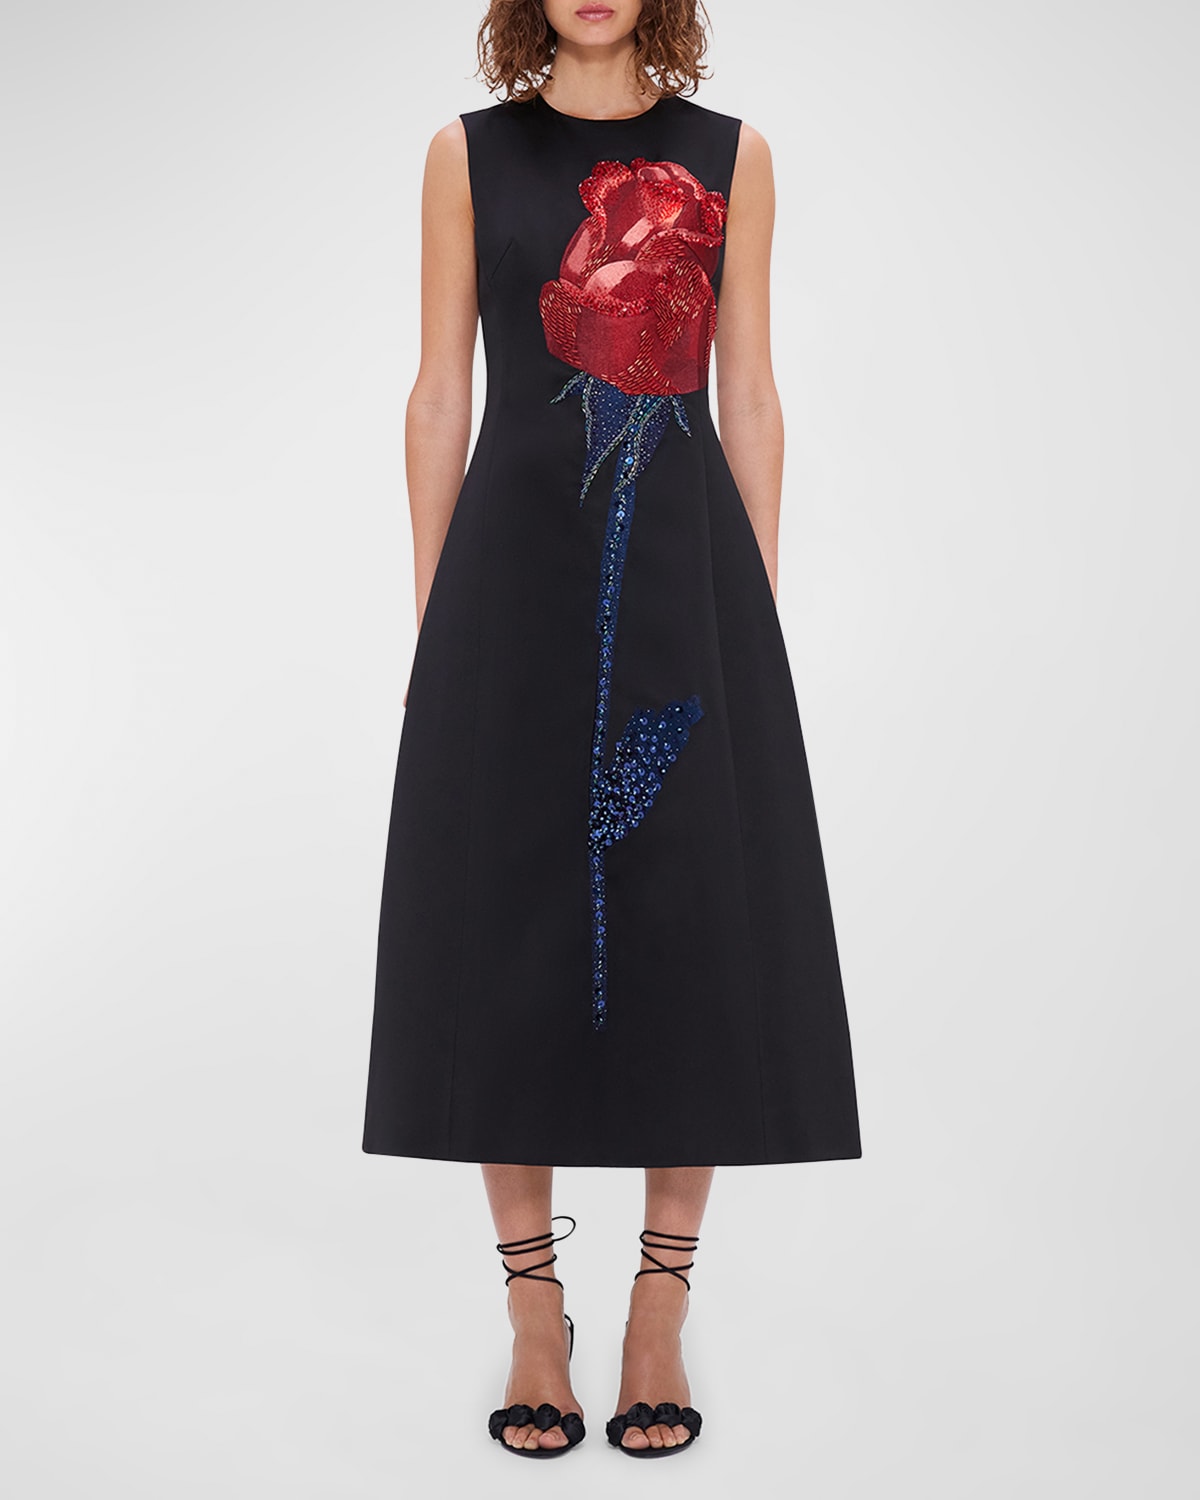 Cleo Bead & Sequin Floral-Print Midi Dress